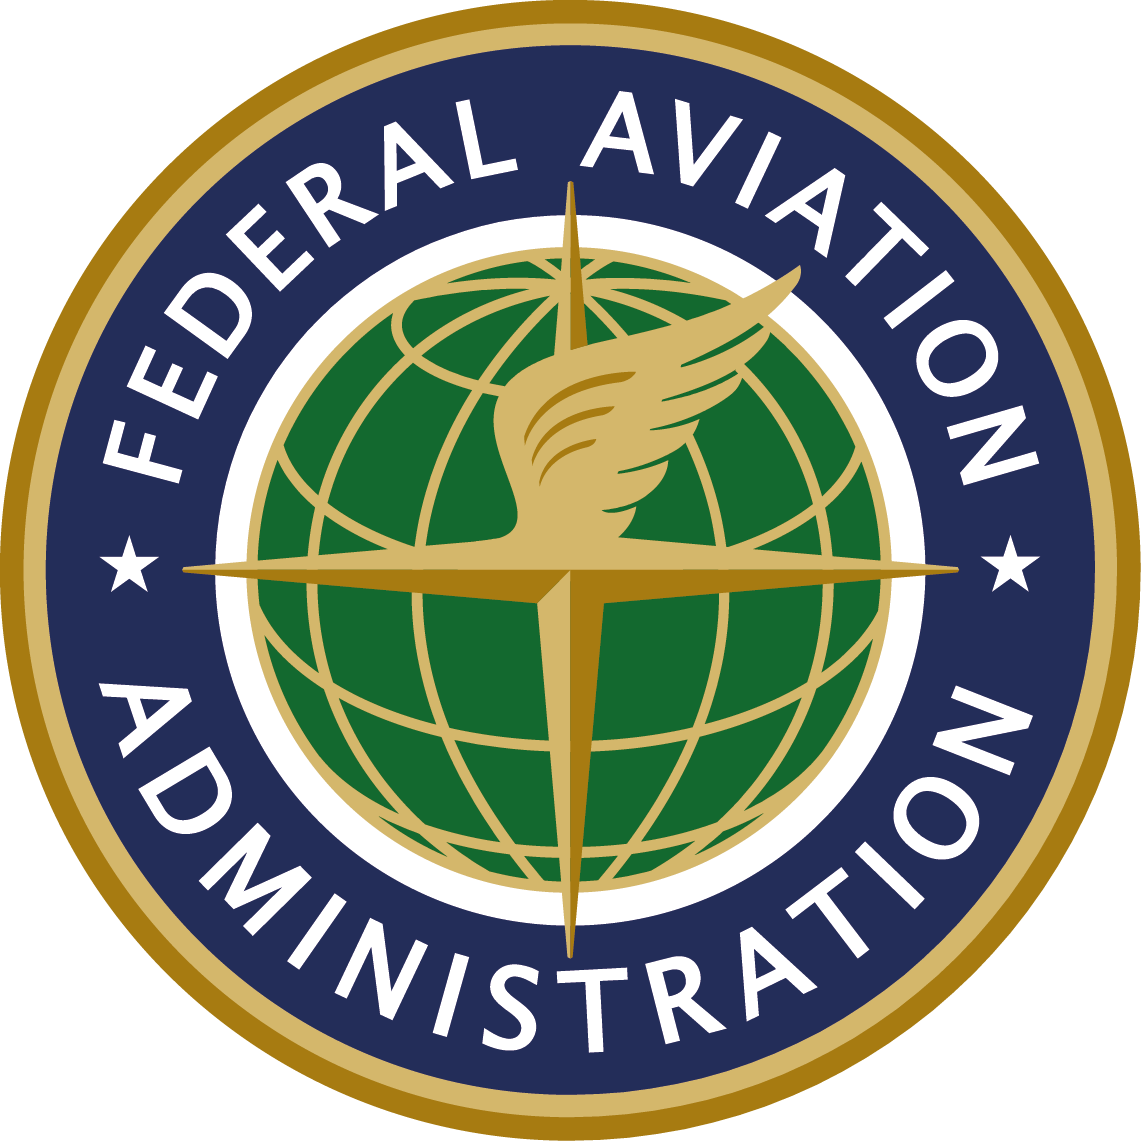 FAA (Federal Aviation Administration)